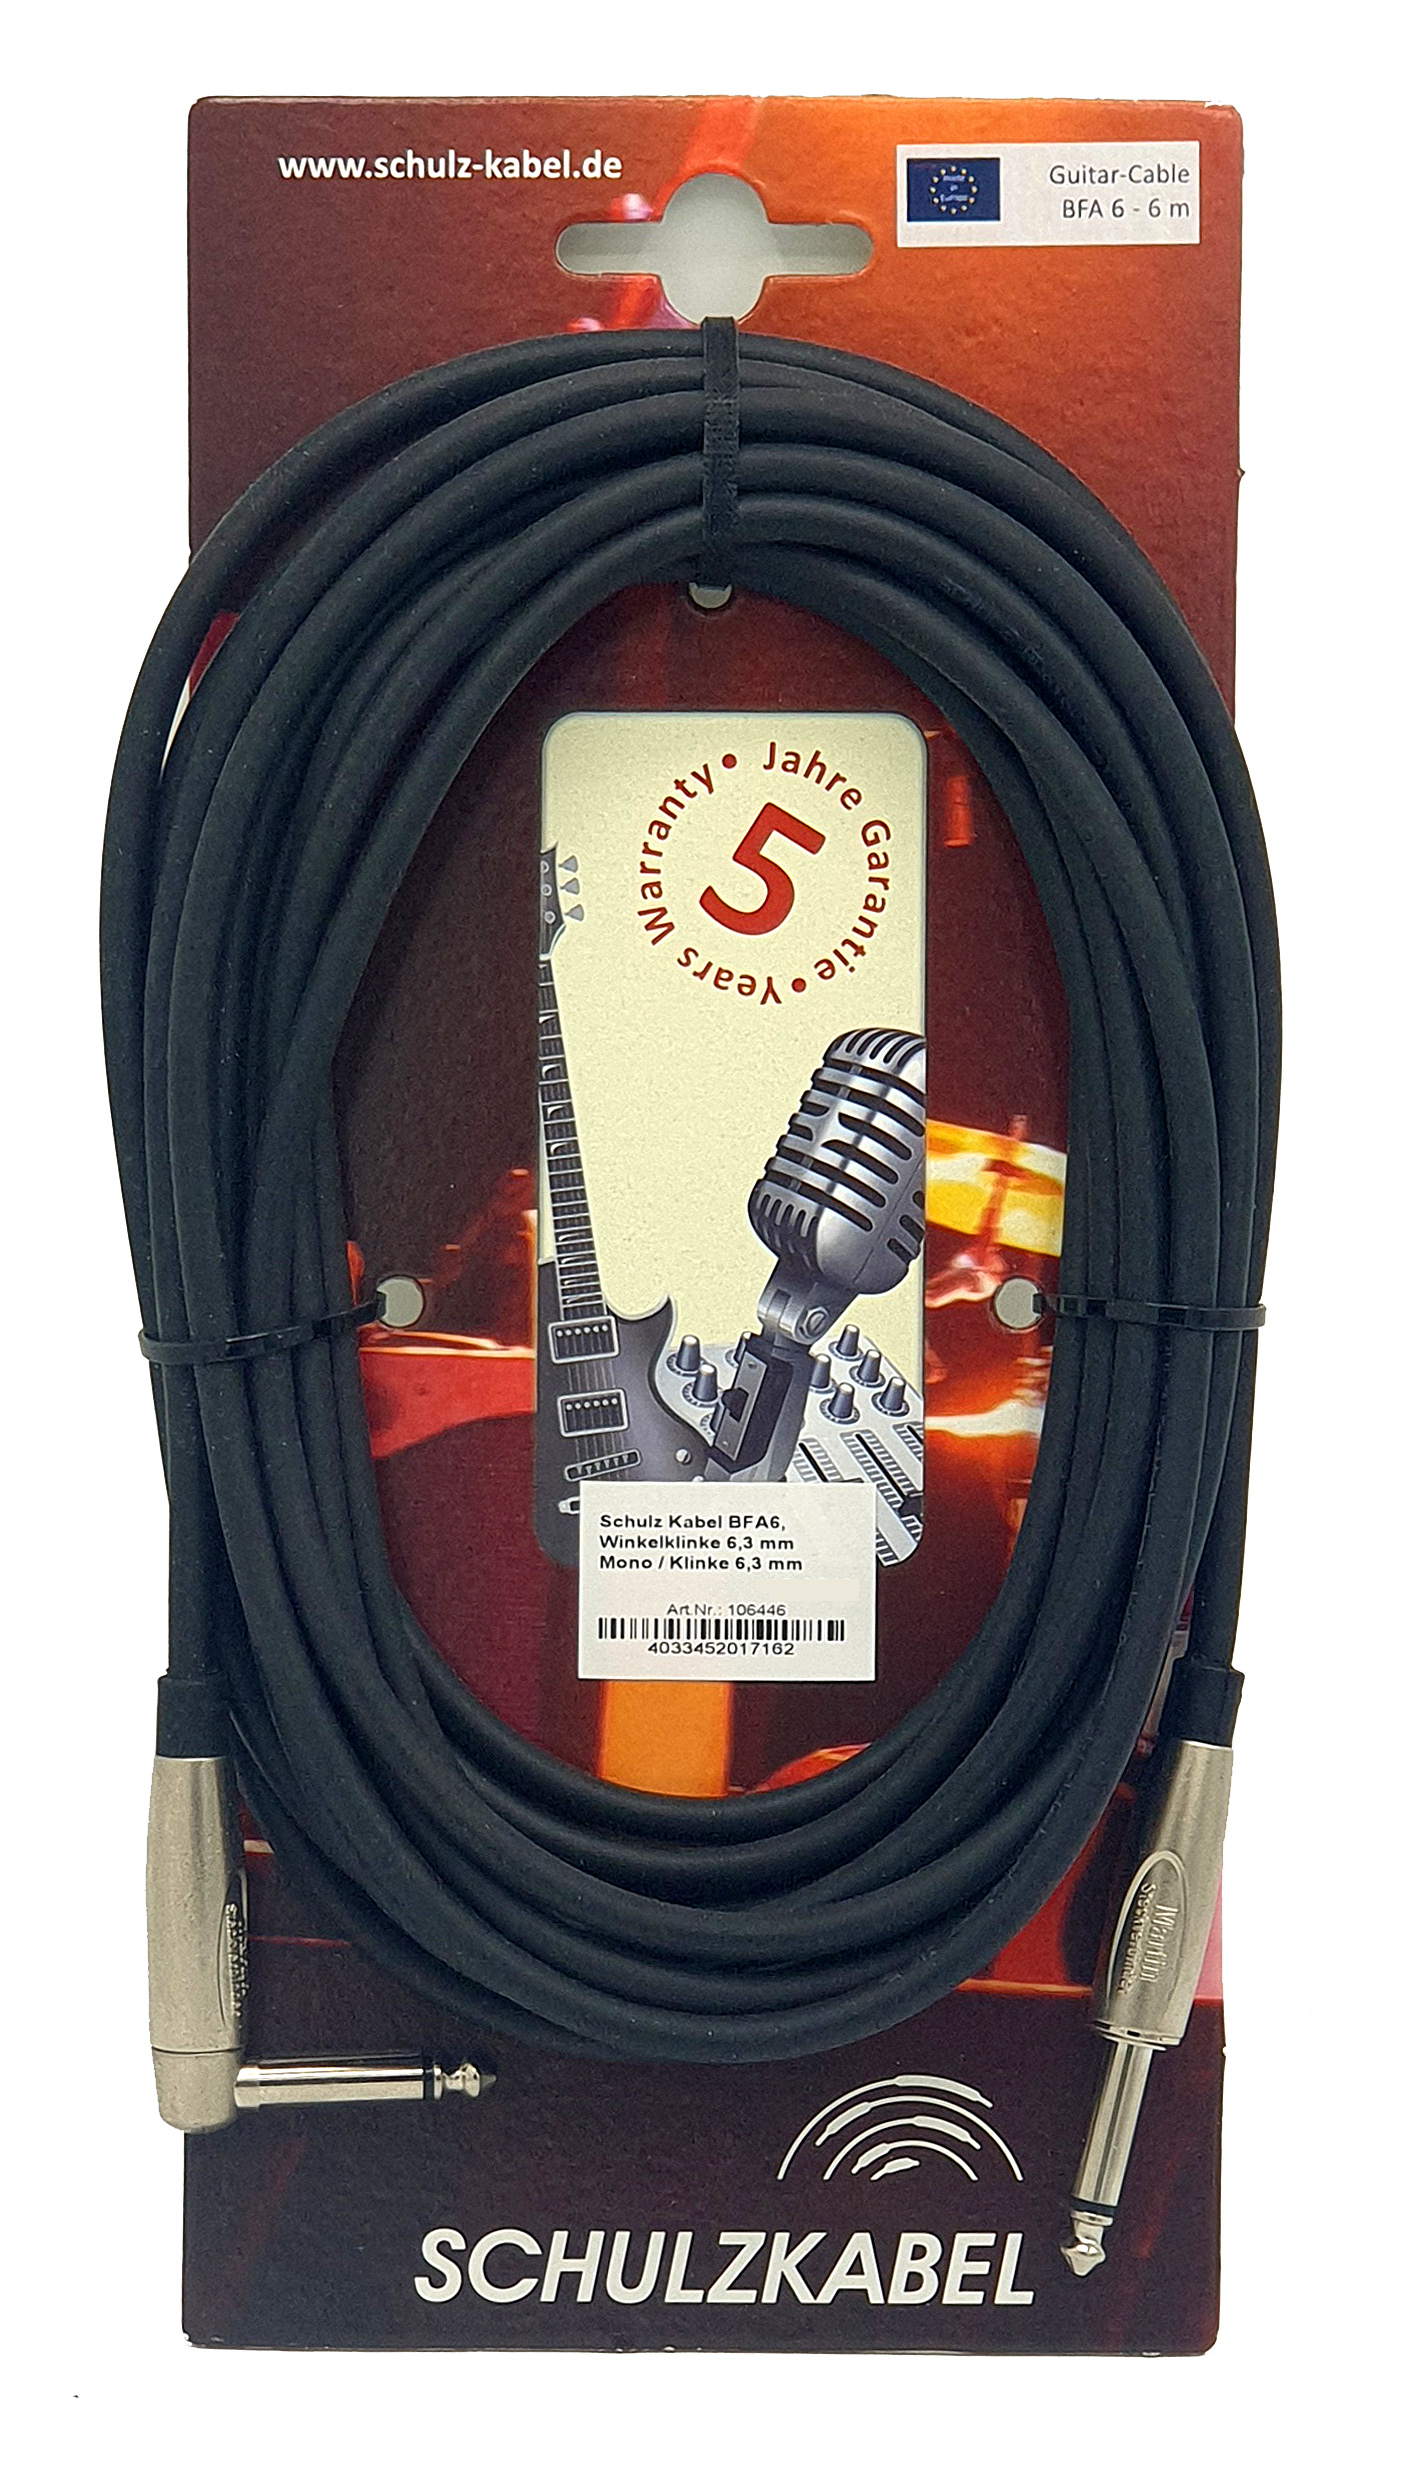 Schulz Kabel BFA Instrumentenkabel Winkelklinke 6,3 mm Mono / Klinke 6,3 mm Mono